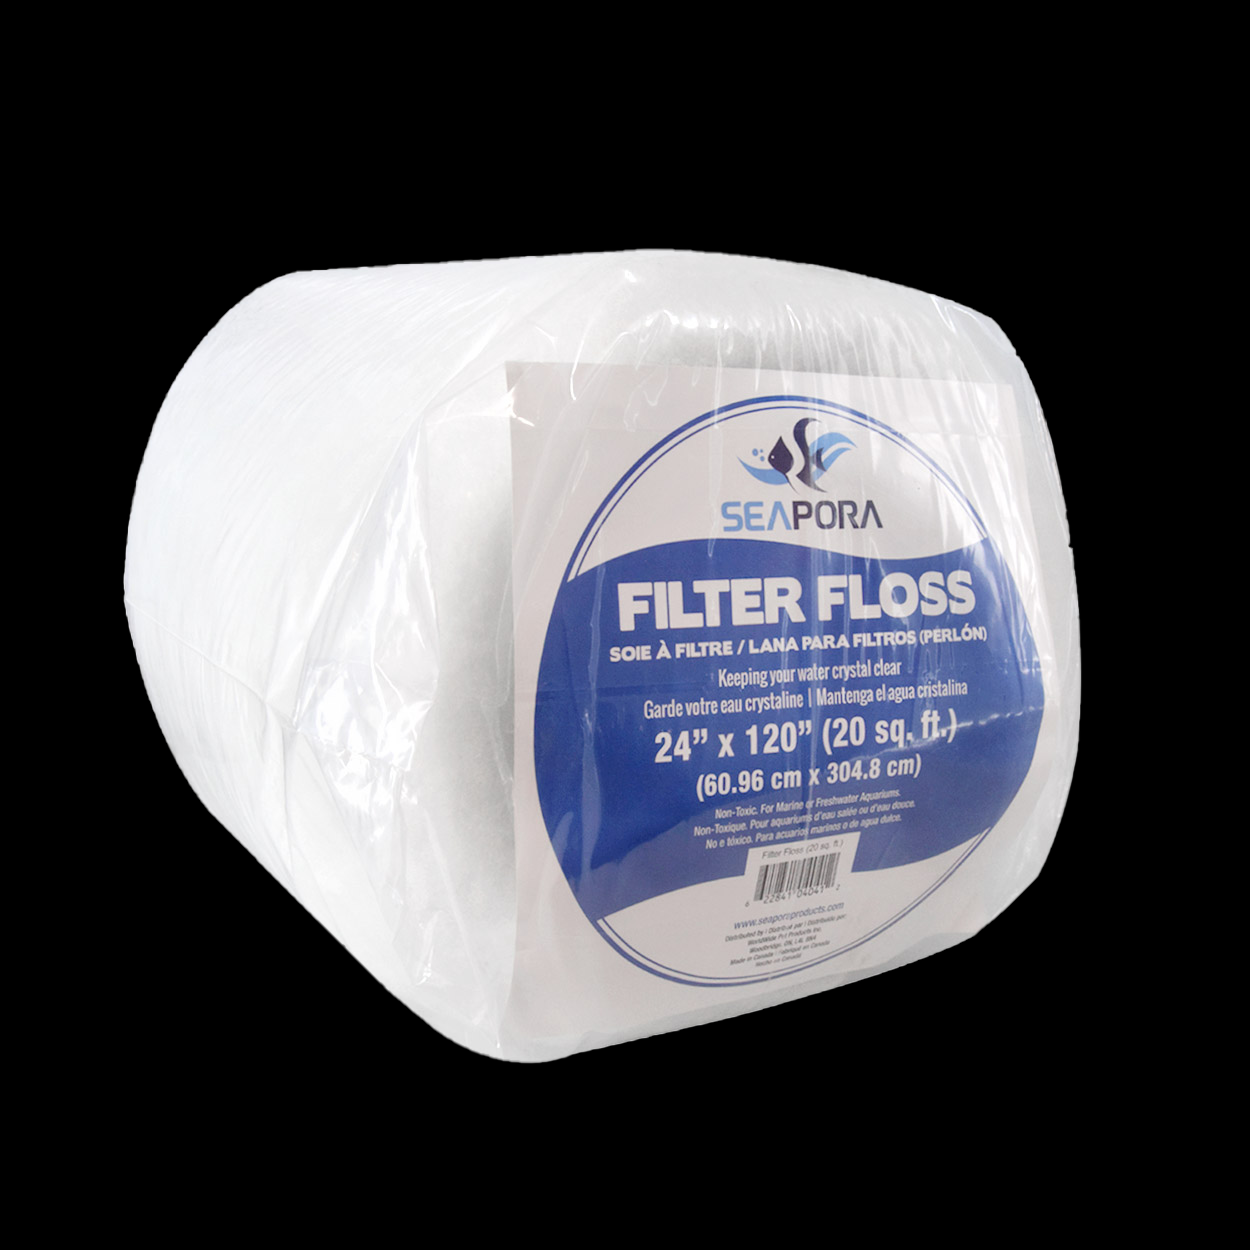 Seapora Filter Floss